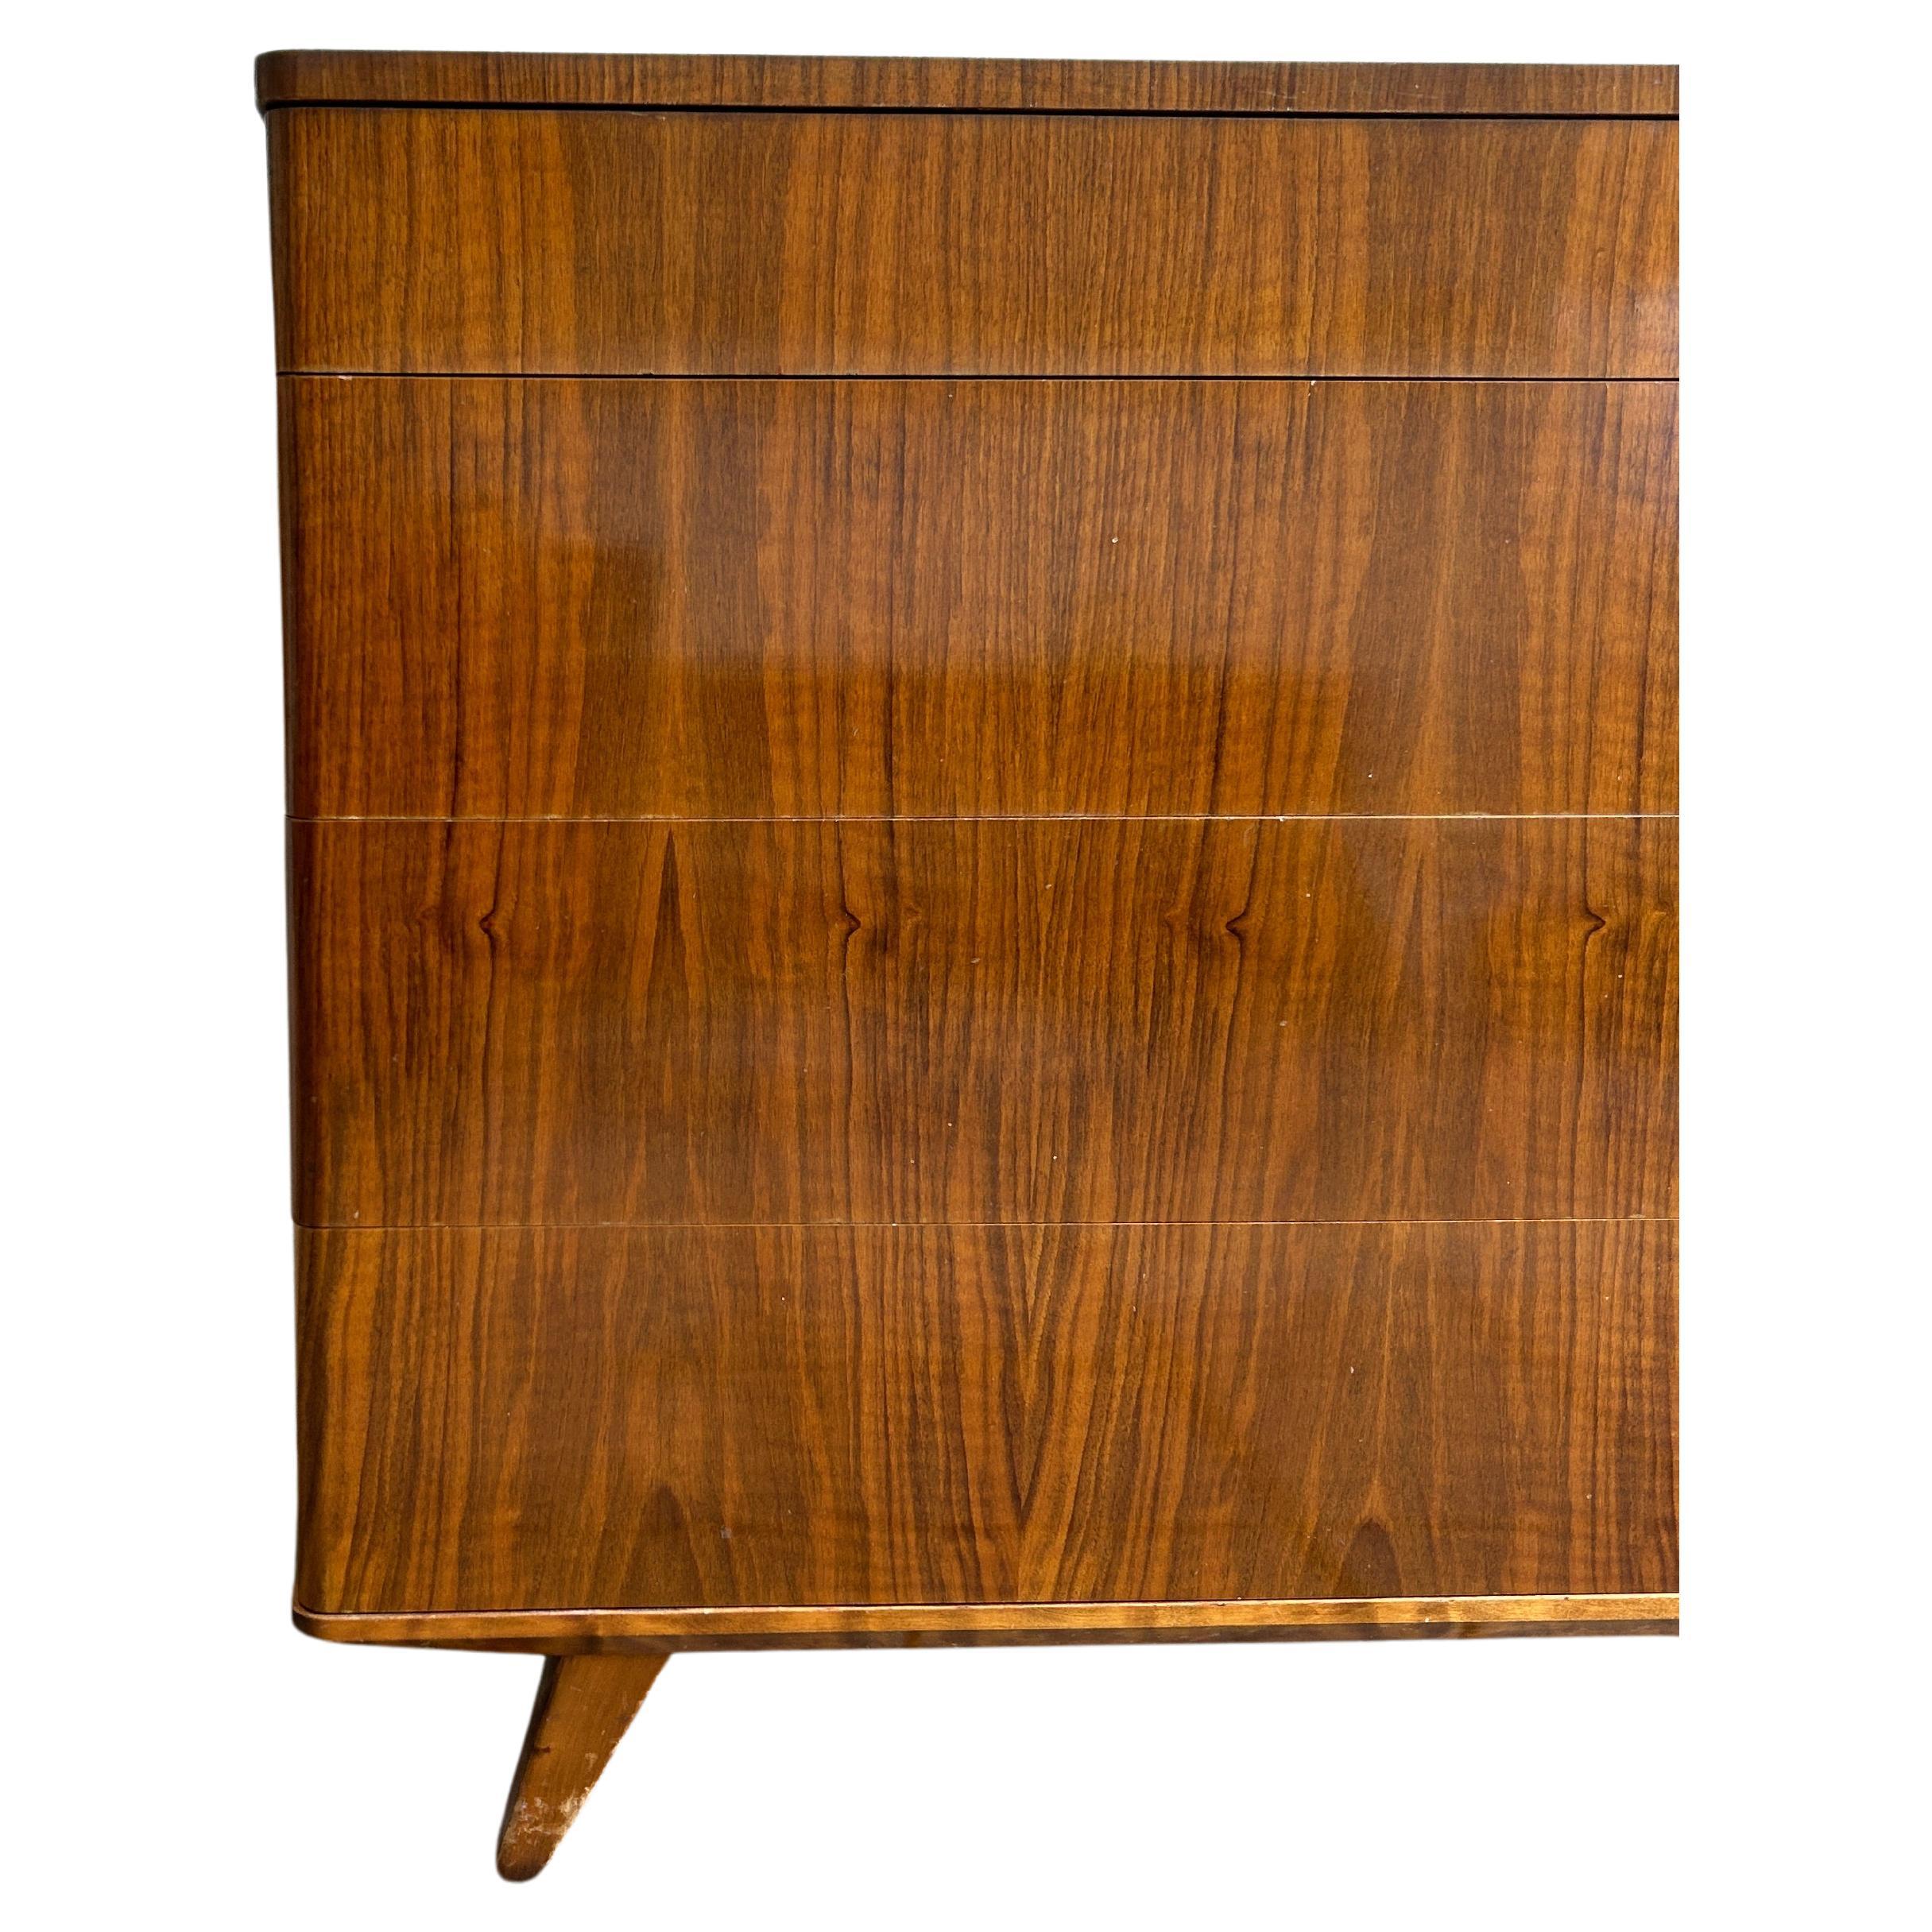 Woodwork Stunning Midcentury 4 Drawer teak Dresser Made in Sweden For Sale